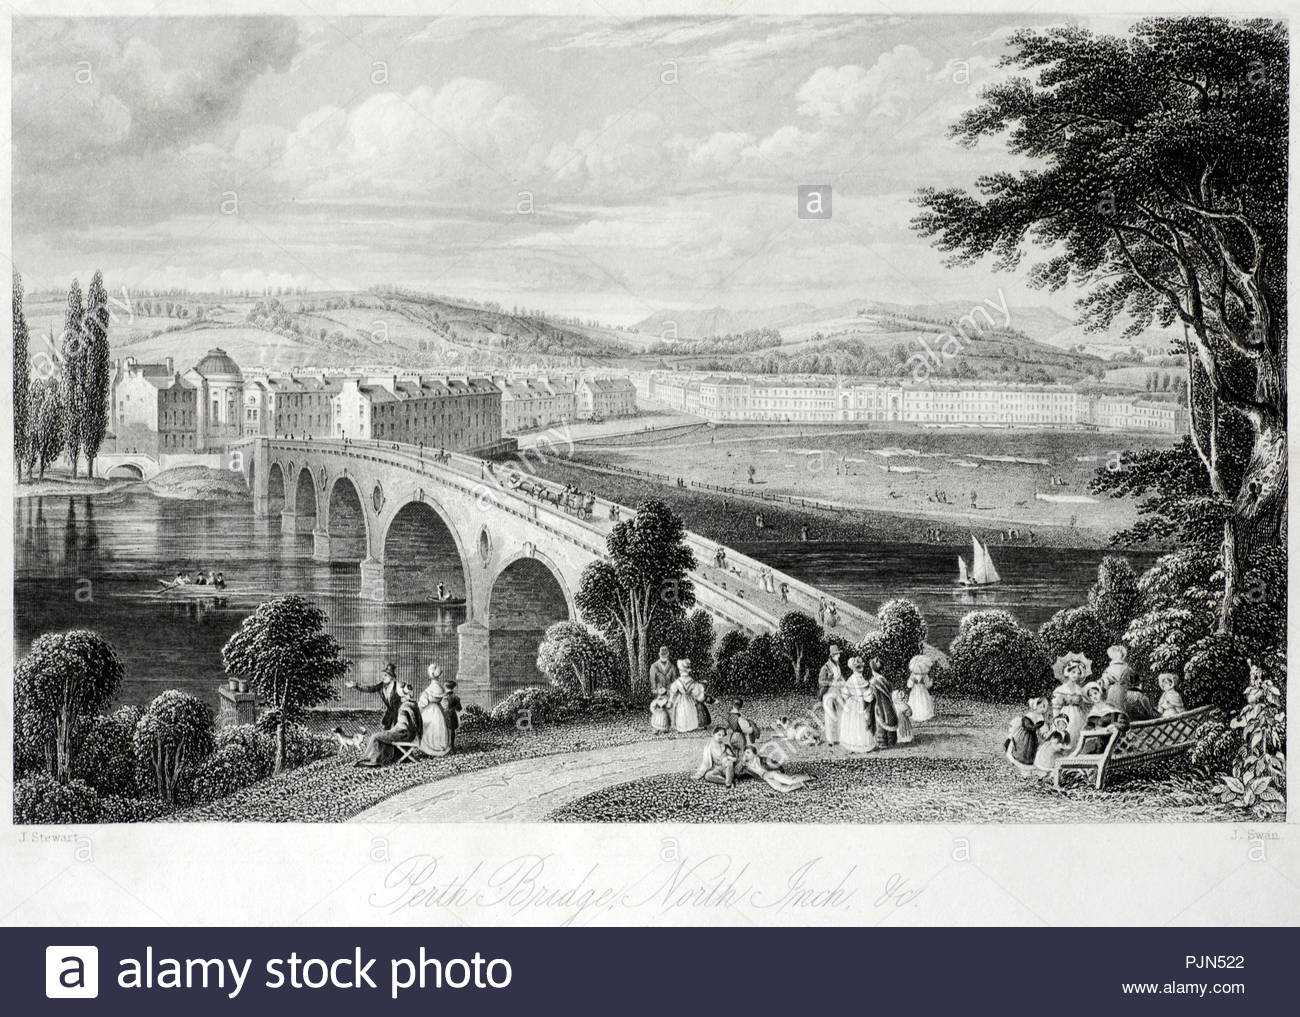 Perth Bridge, Perth Scotland, antique illustration from 1850 Stock Photo